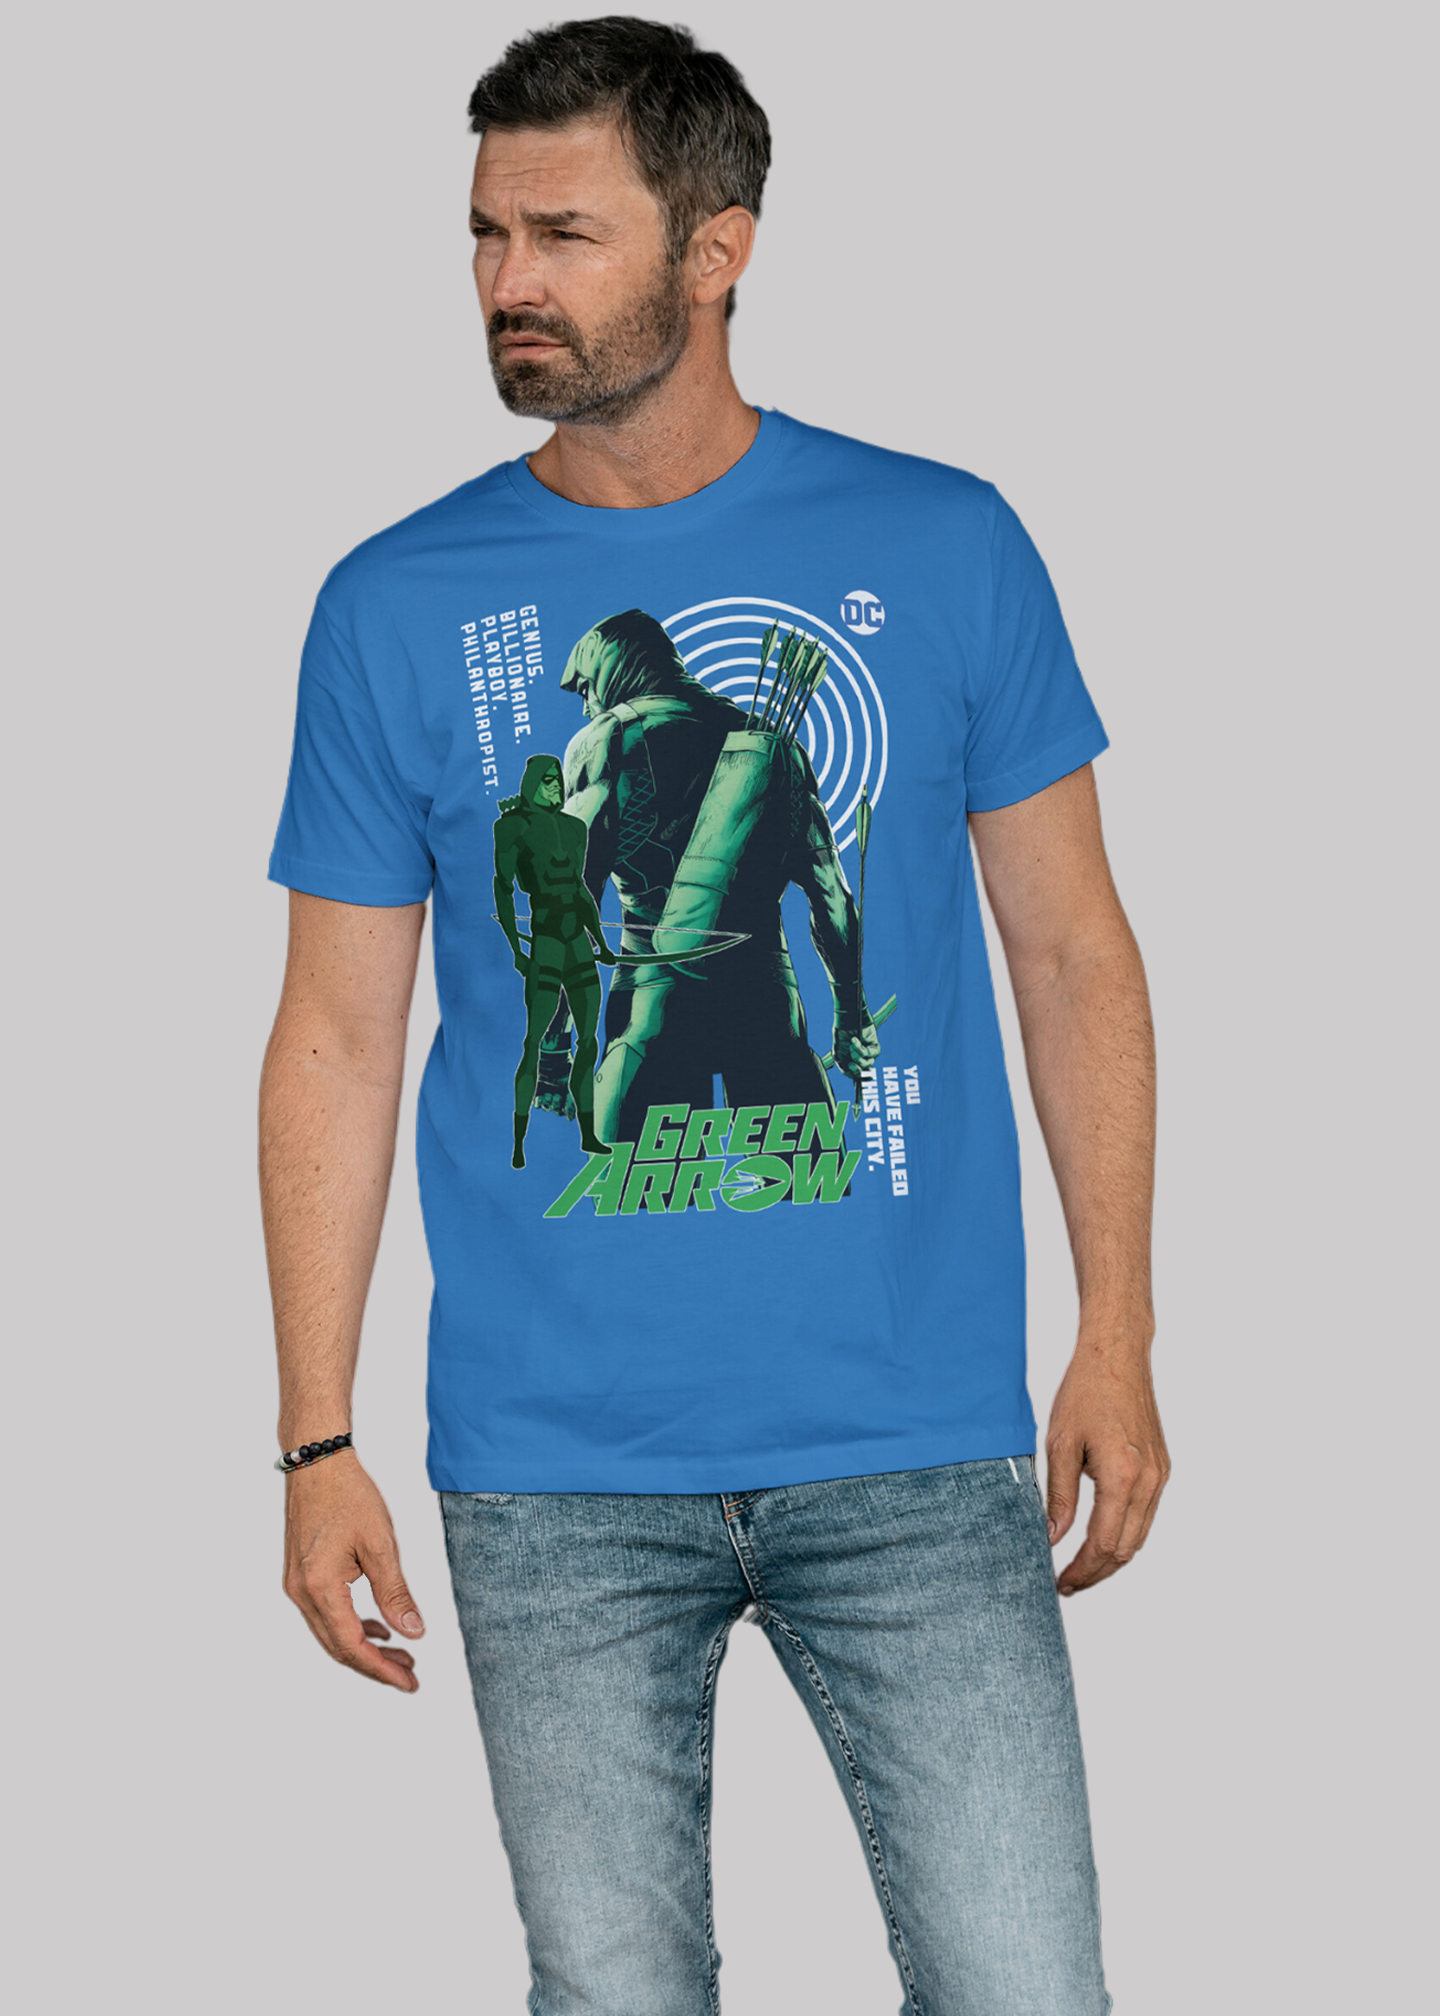 Green arrow Printed Half Sleeve Premium Cotton T-shirt For Men